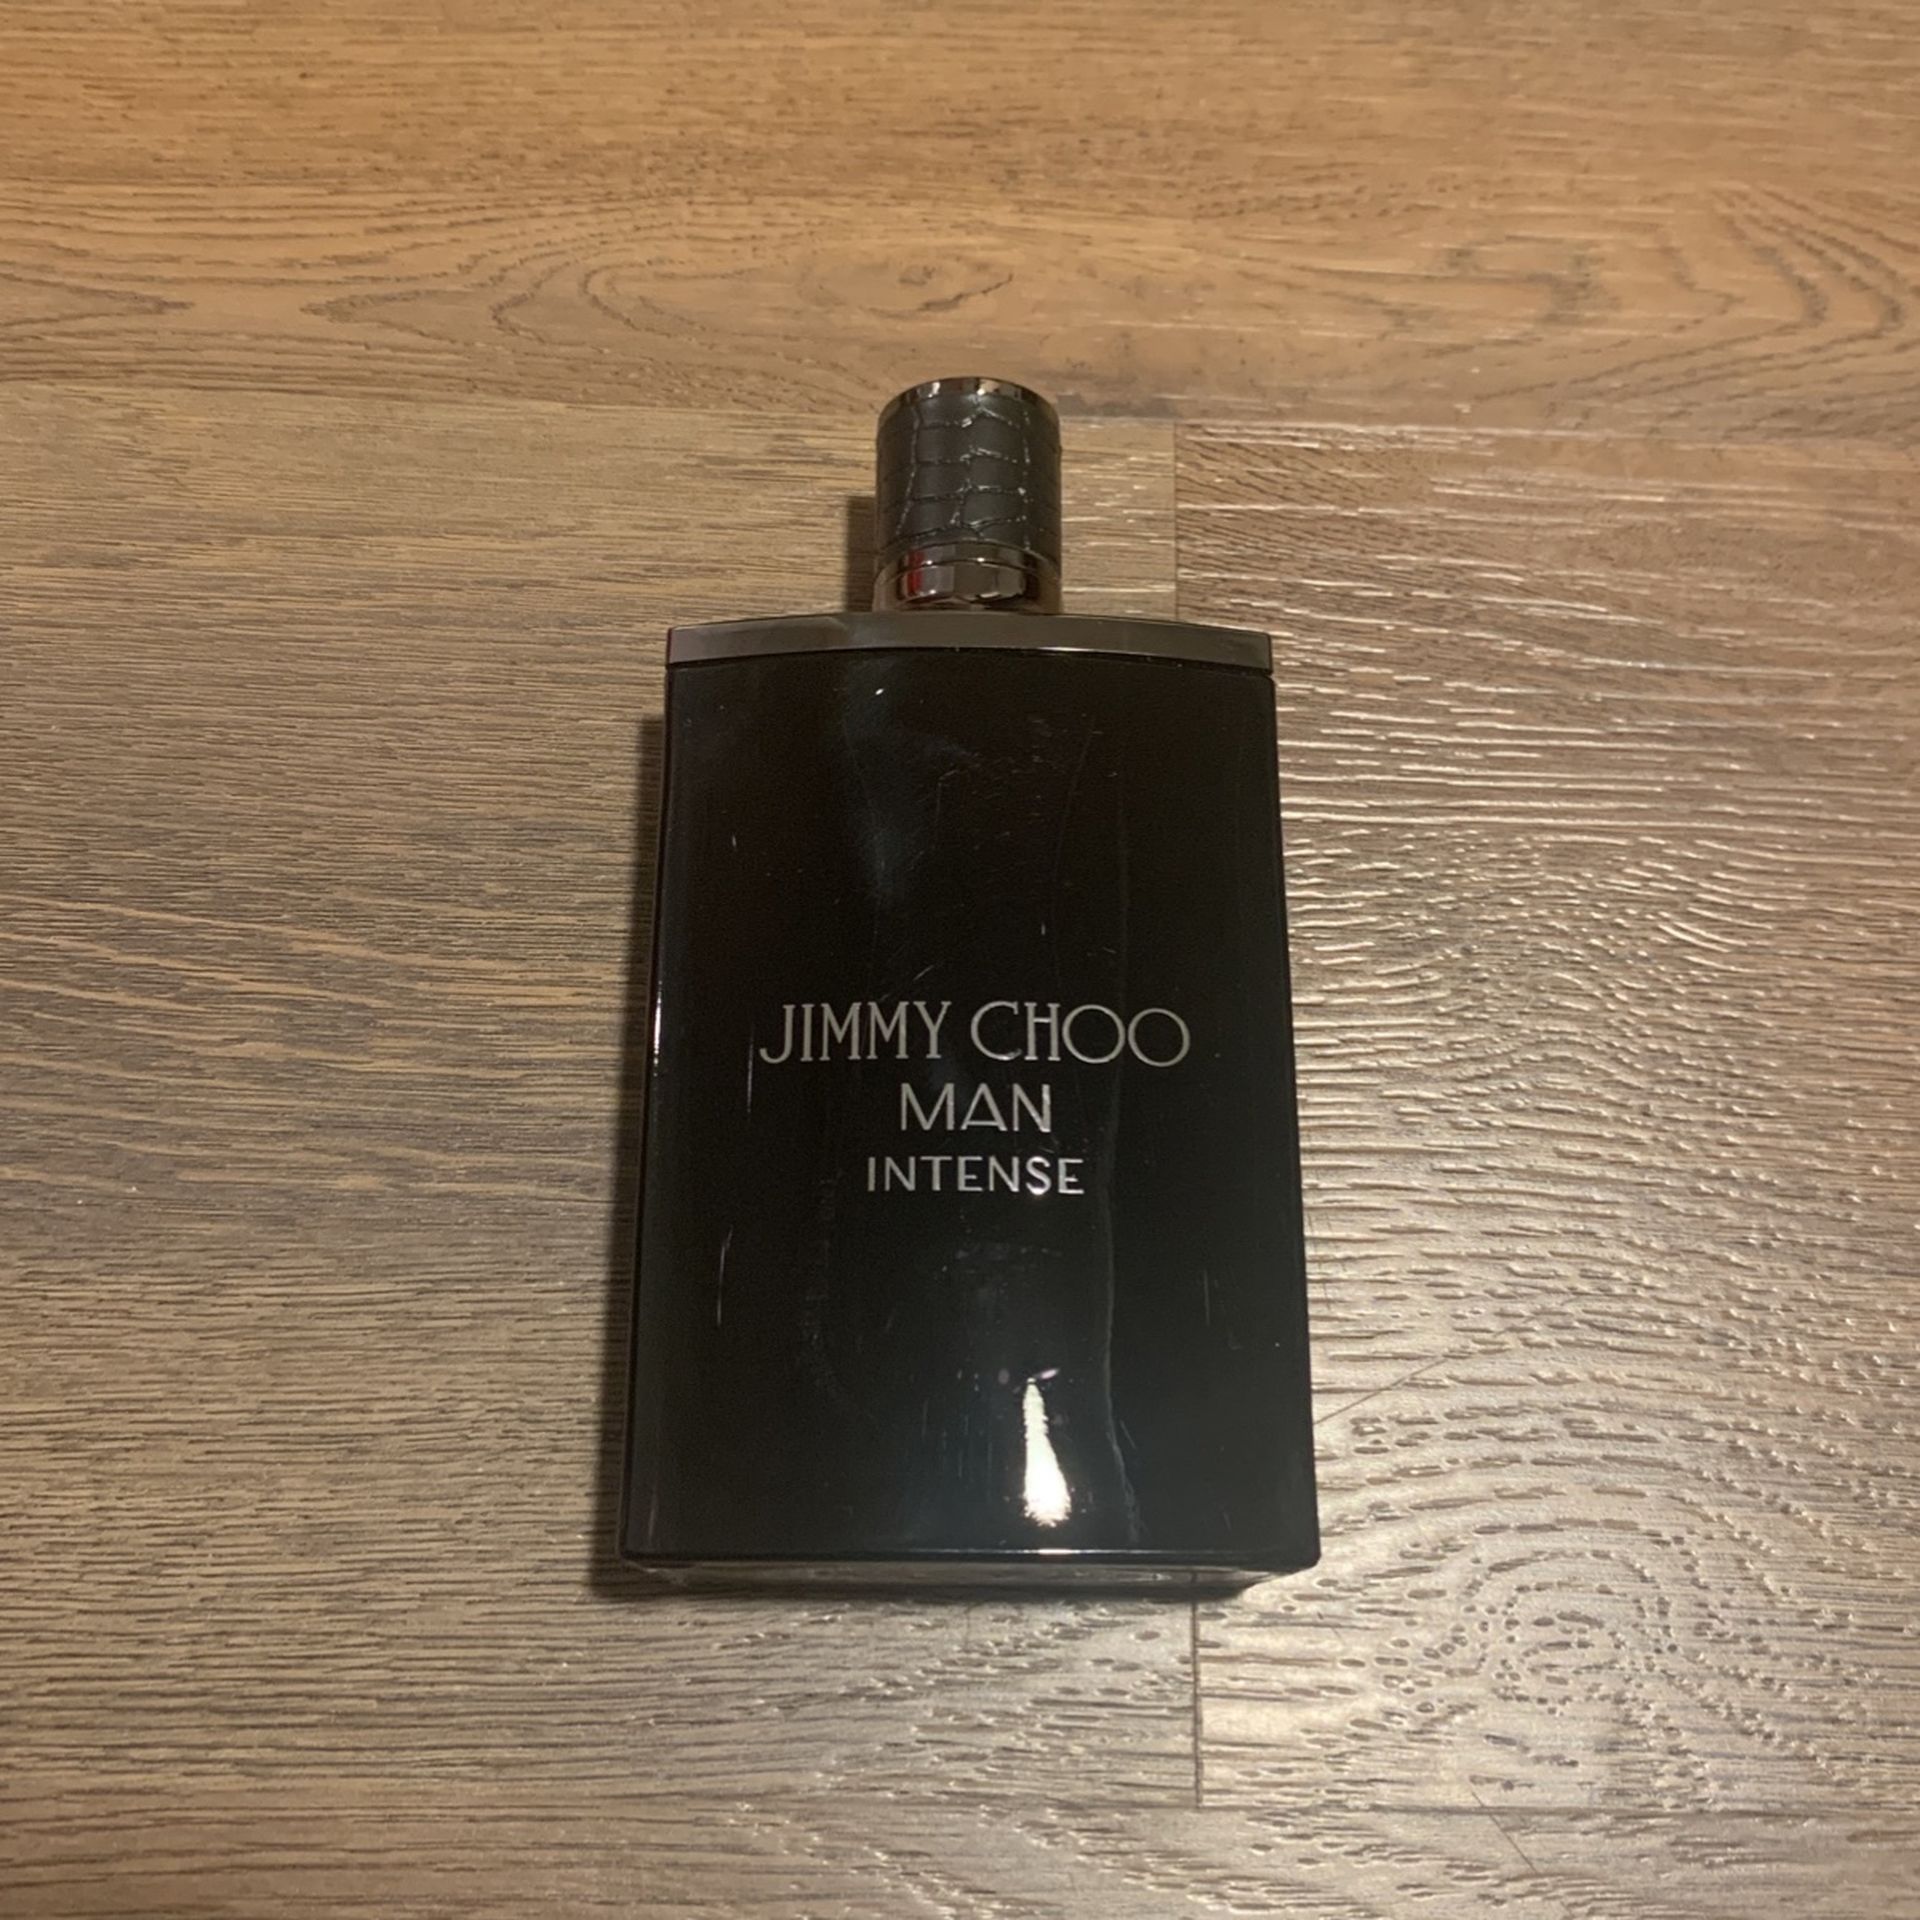 Jimmy Choo Man Intense Cologne